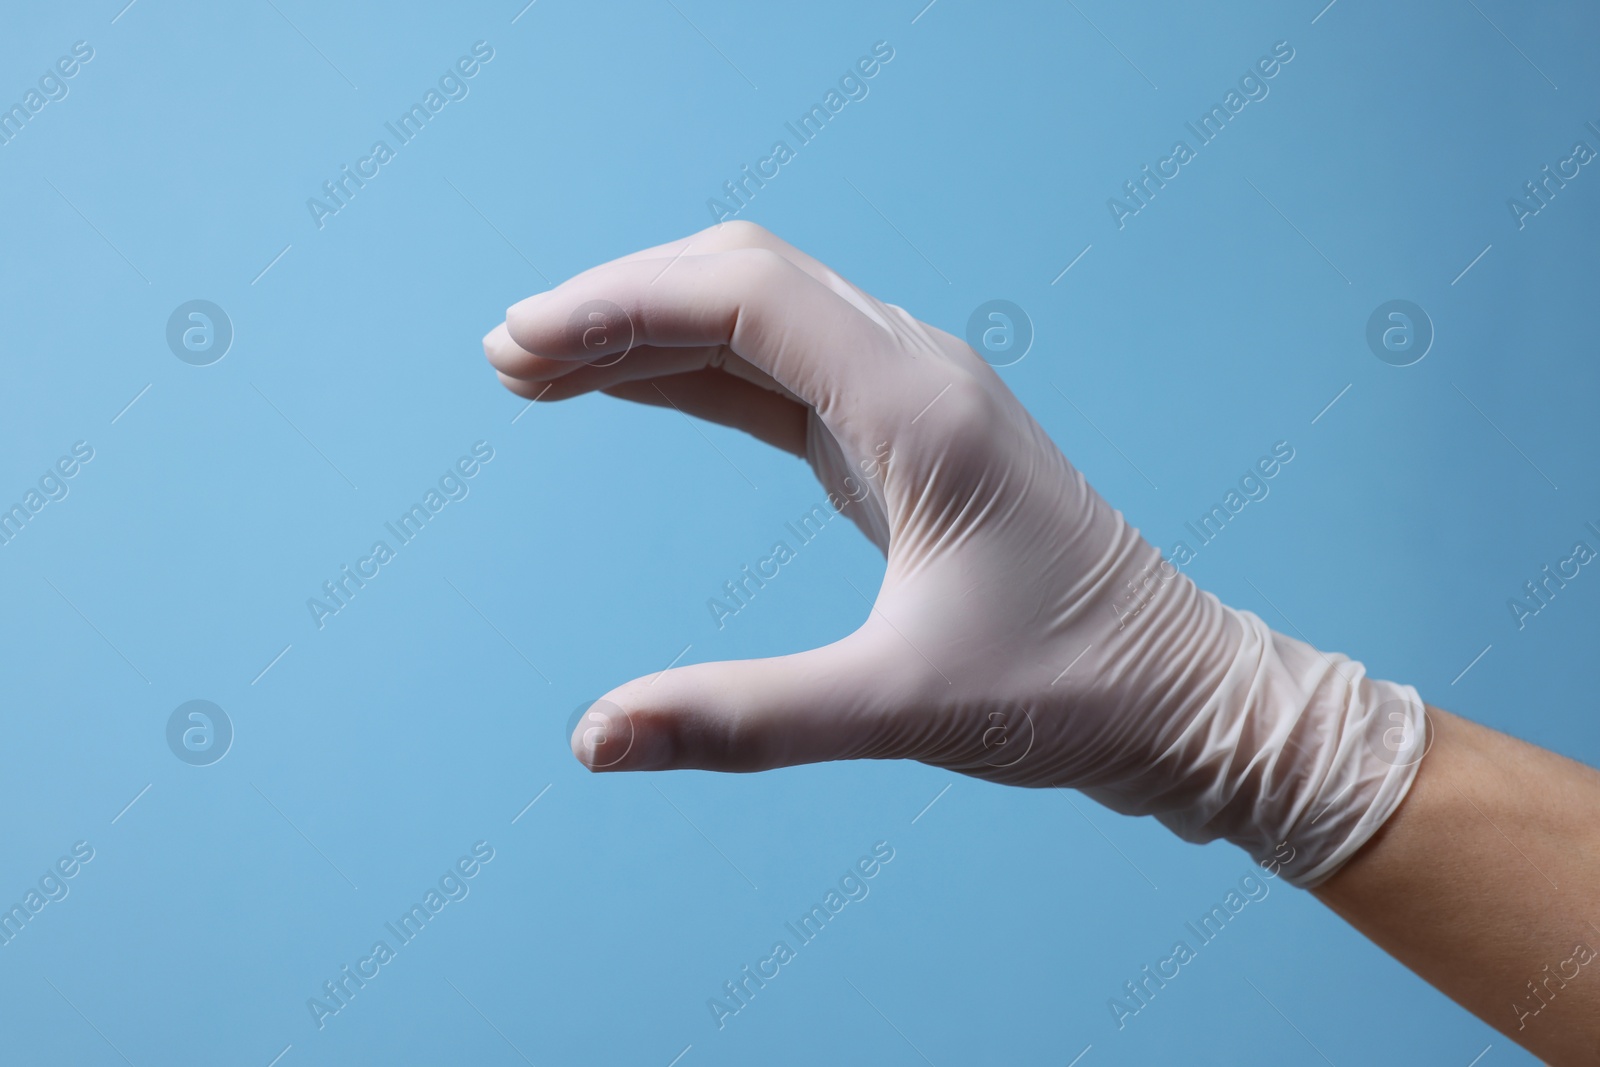 Photo of Doctor wearing white medical glove holding something on light blue background, closeup